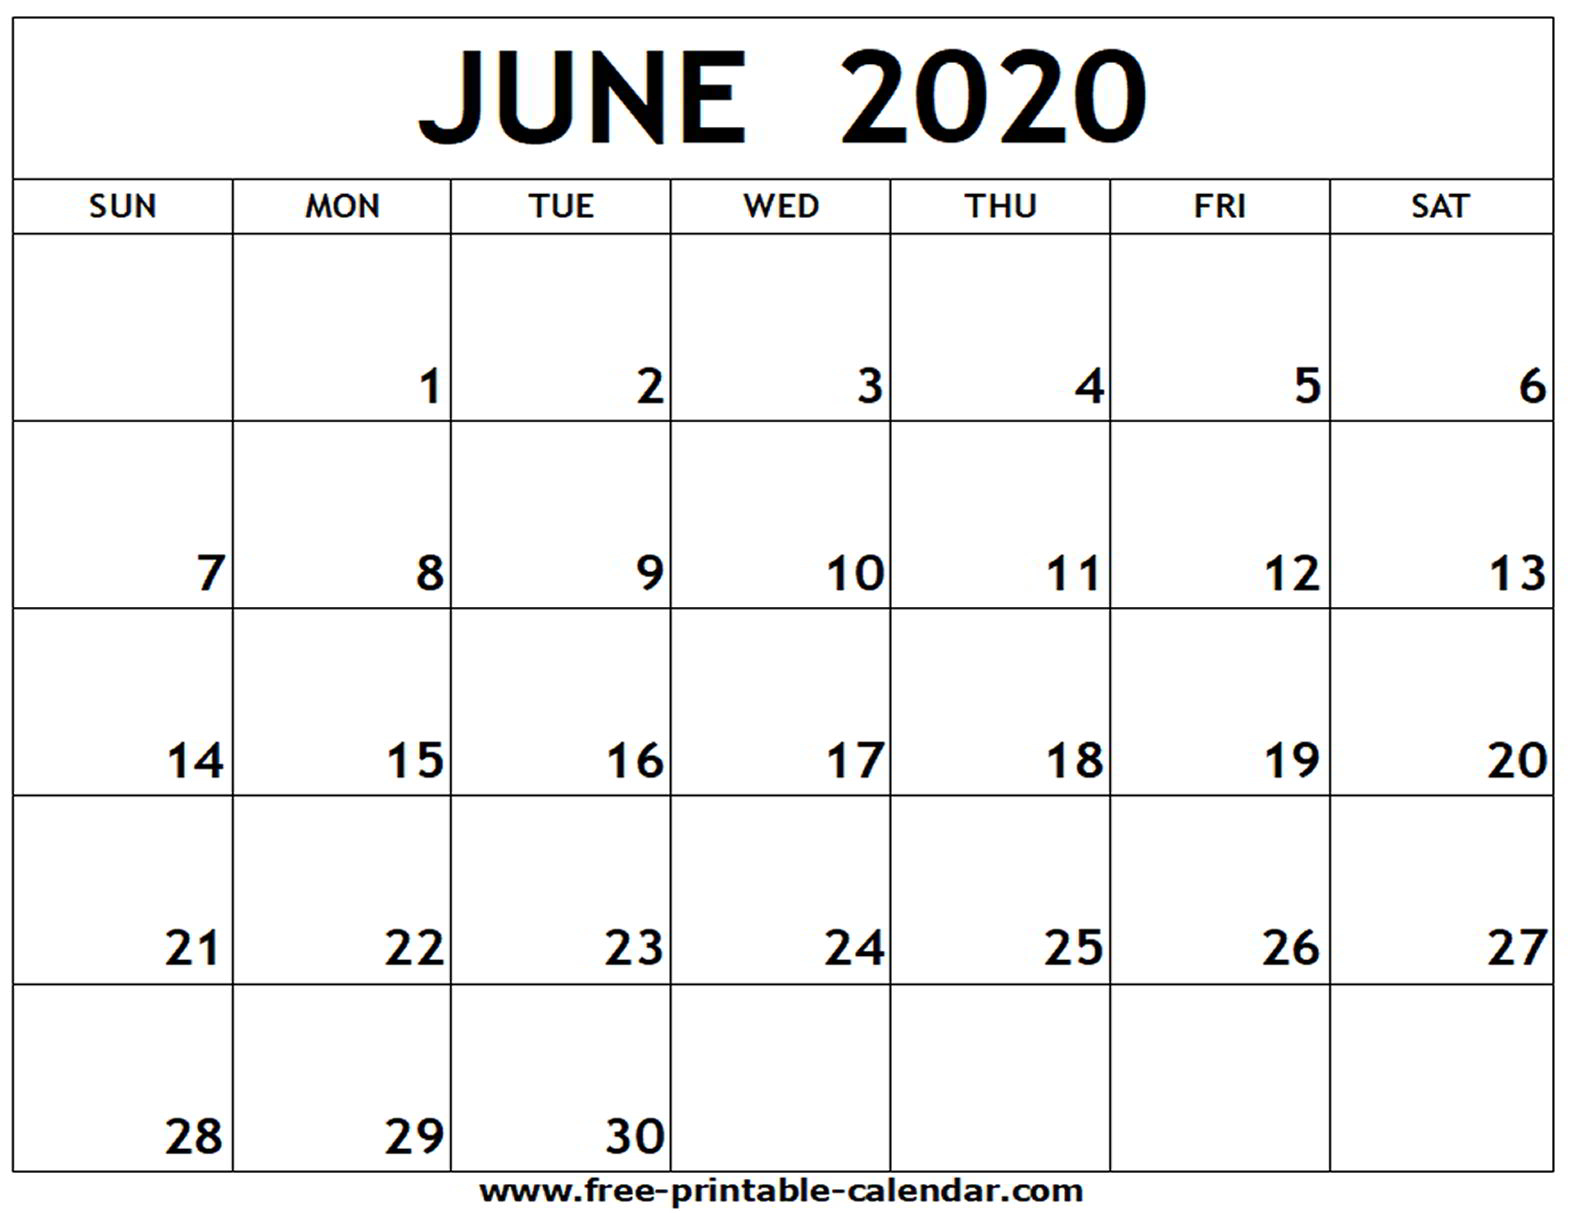 Printable Calendars June 2020 - Wpa.wpart.co